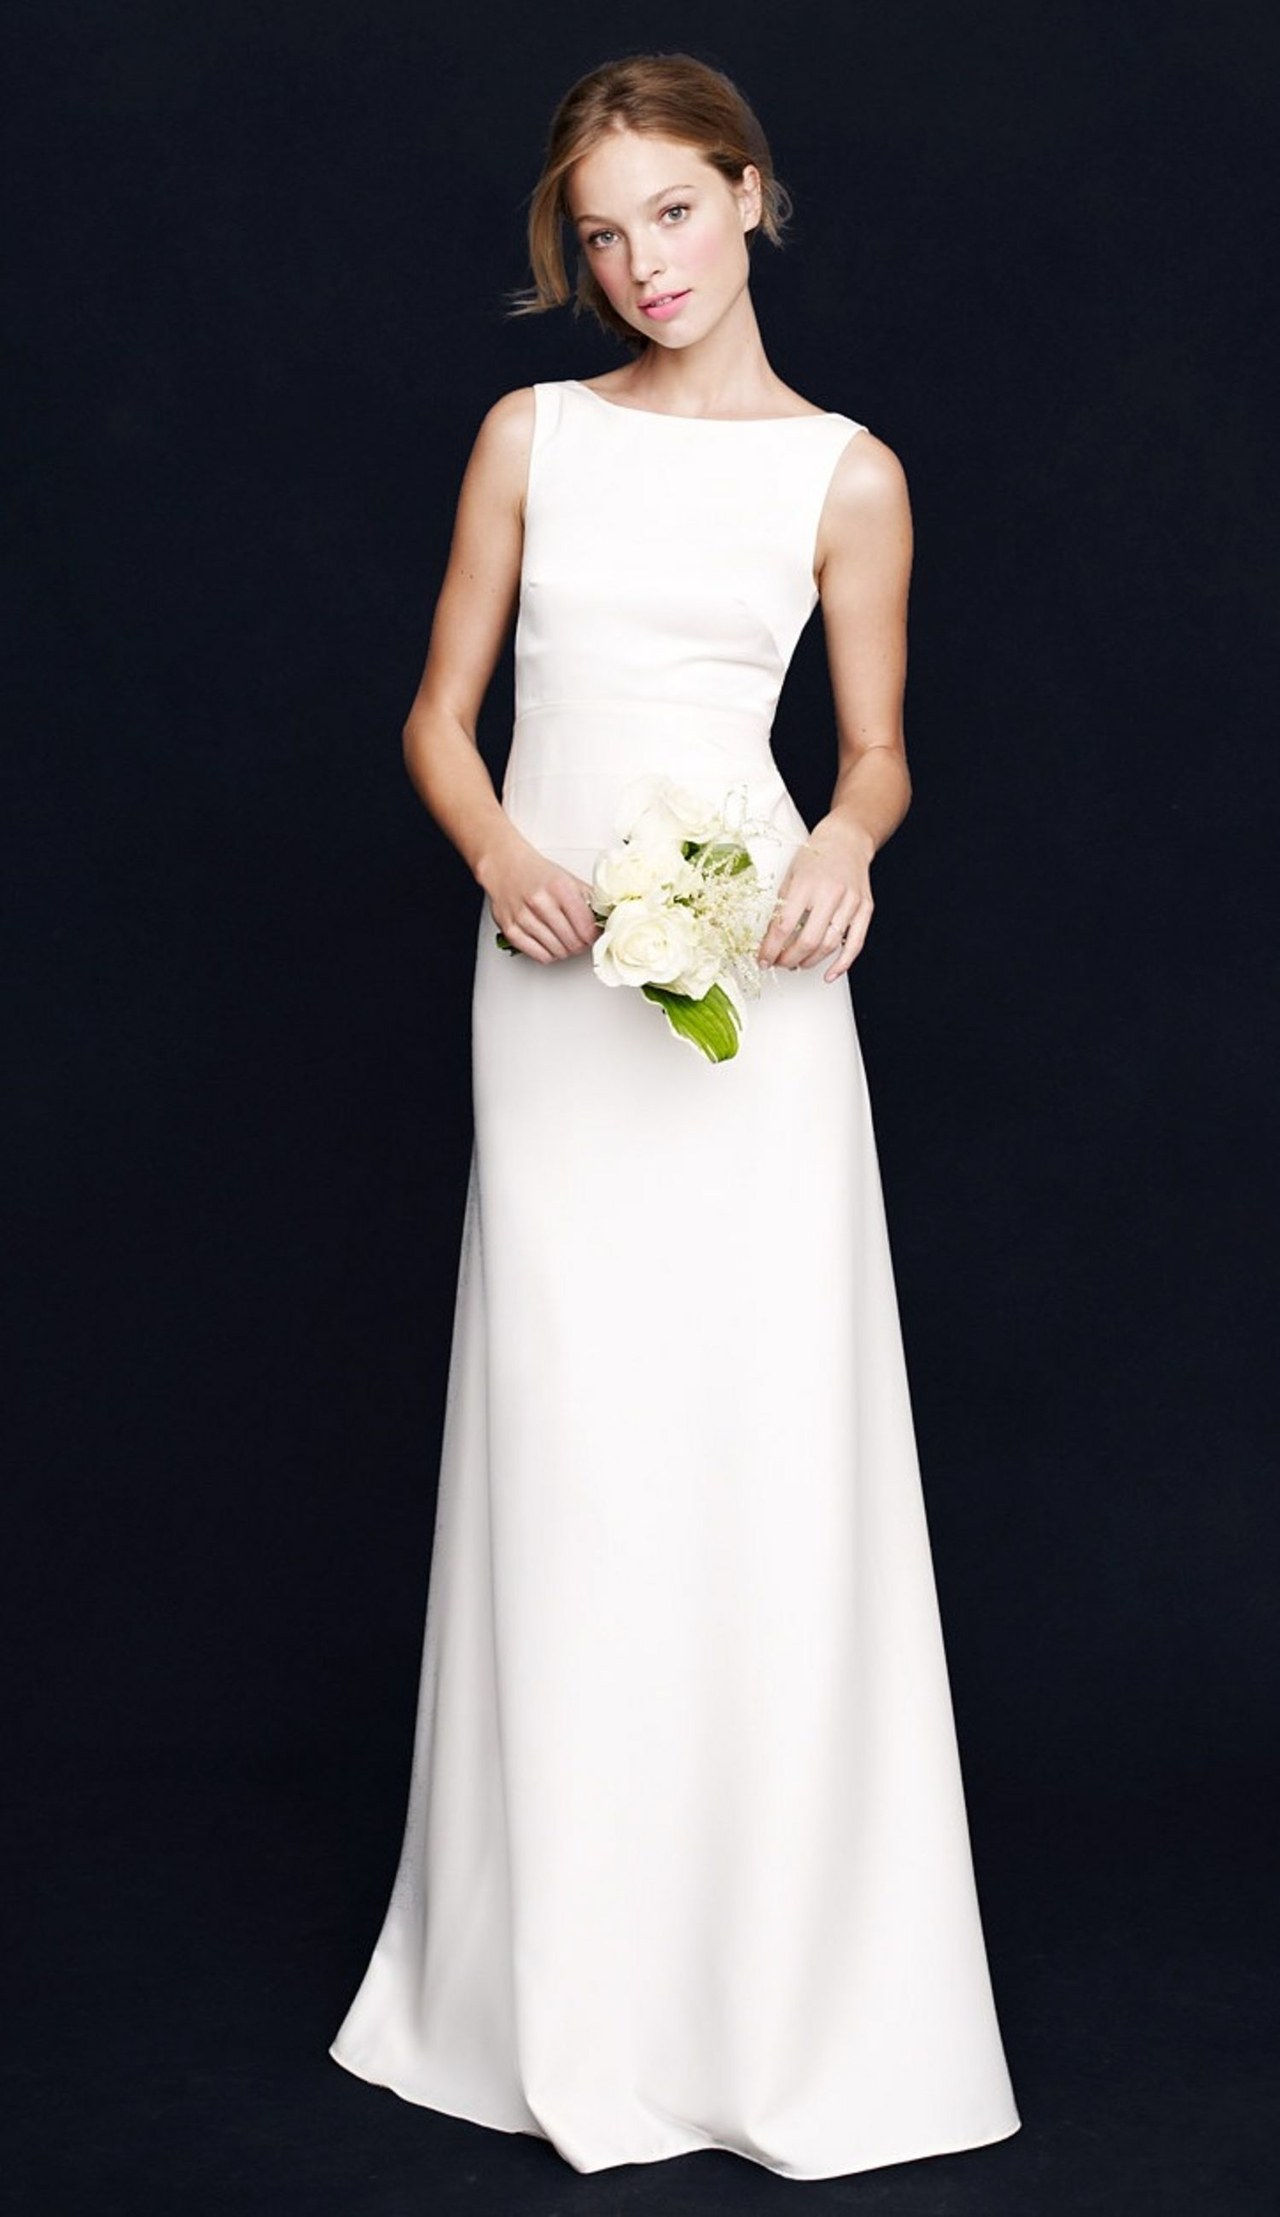 五 minimalist wedding dresses jcrew 0922